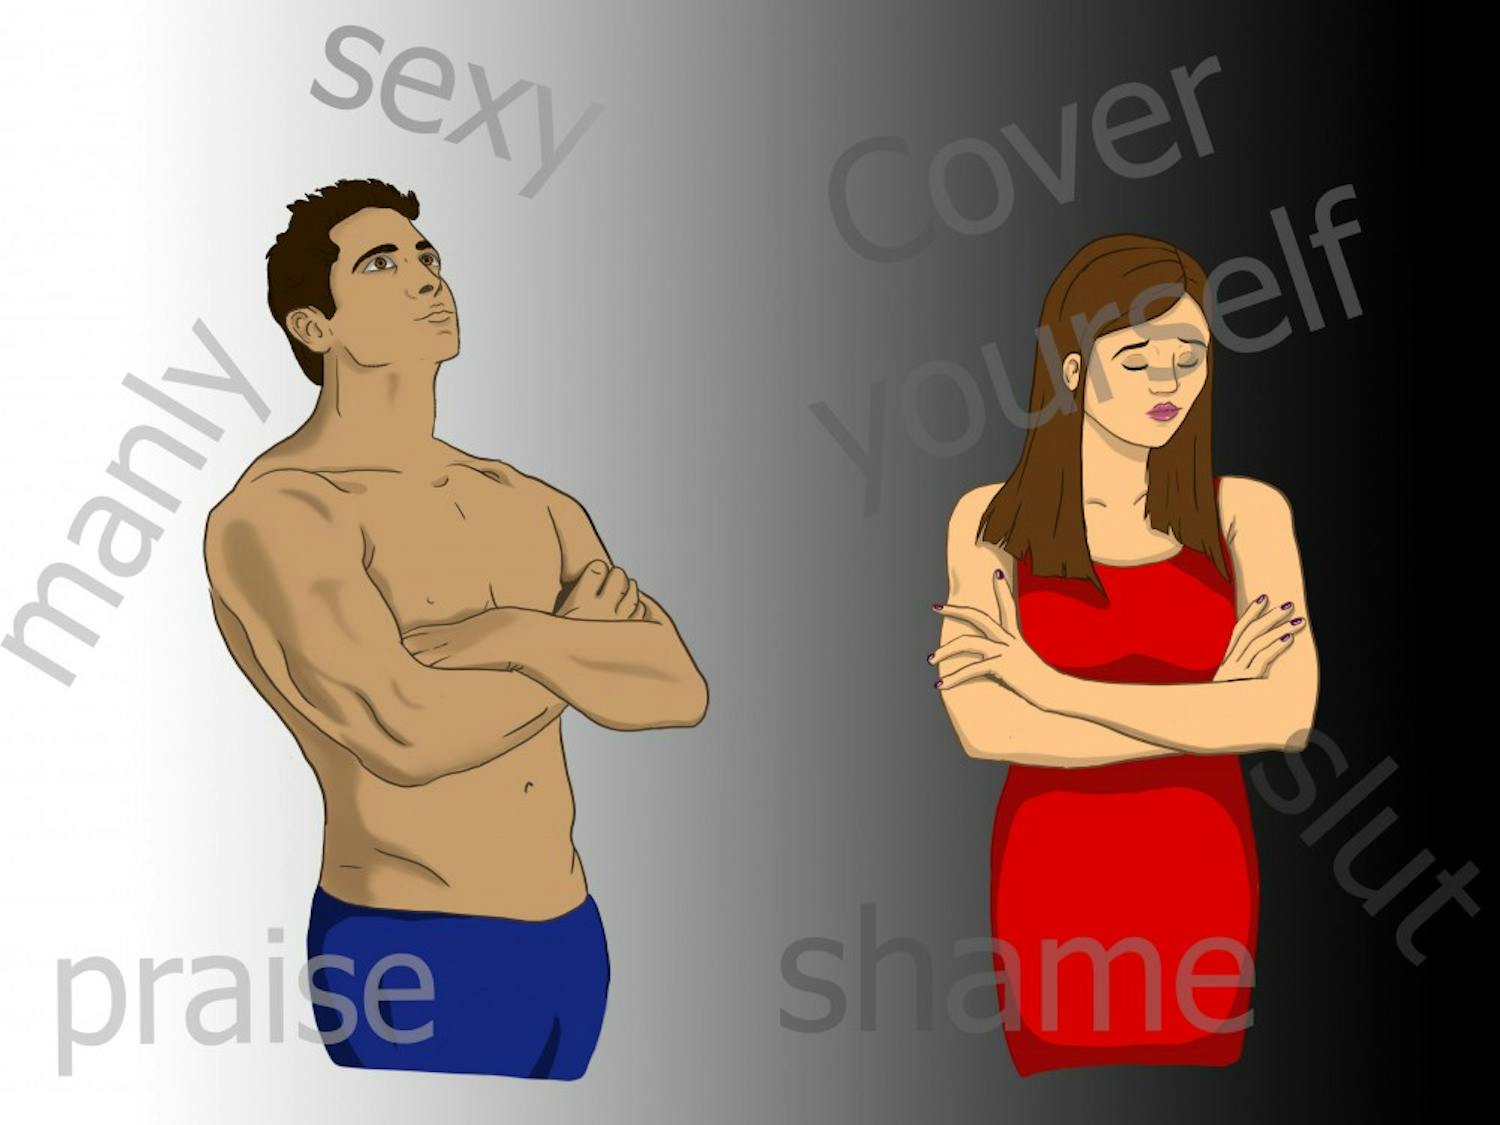 male vs female sexuality 